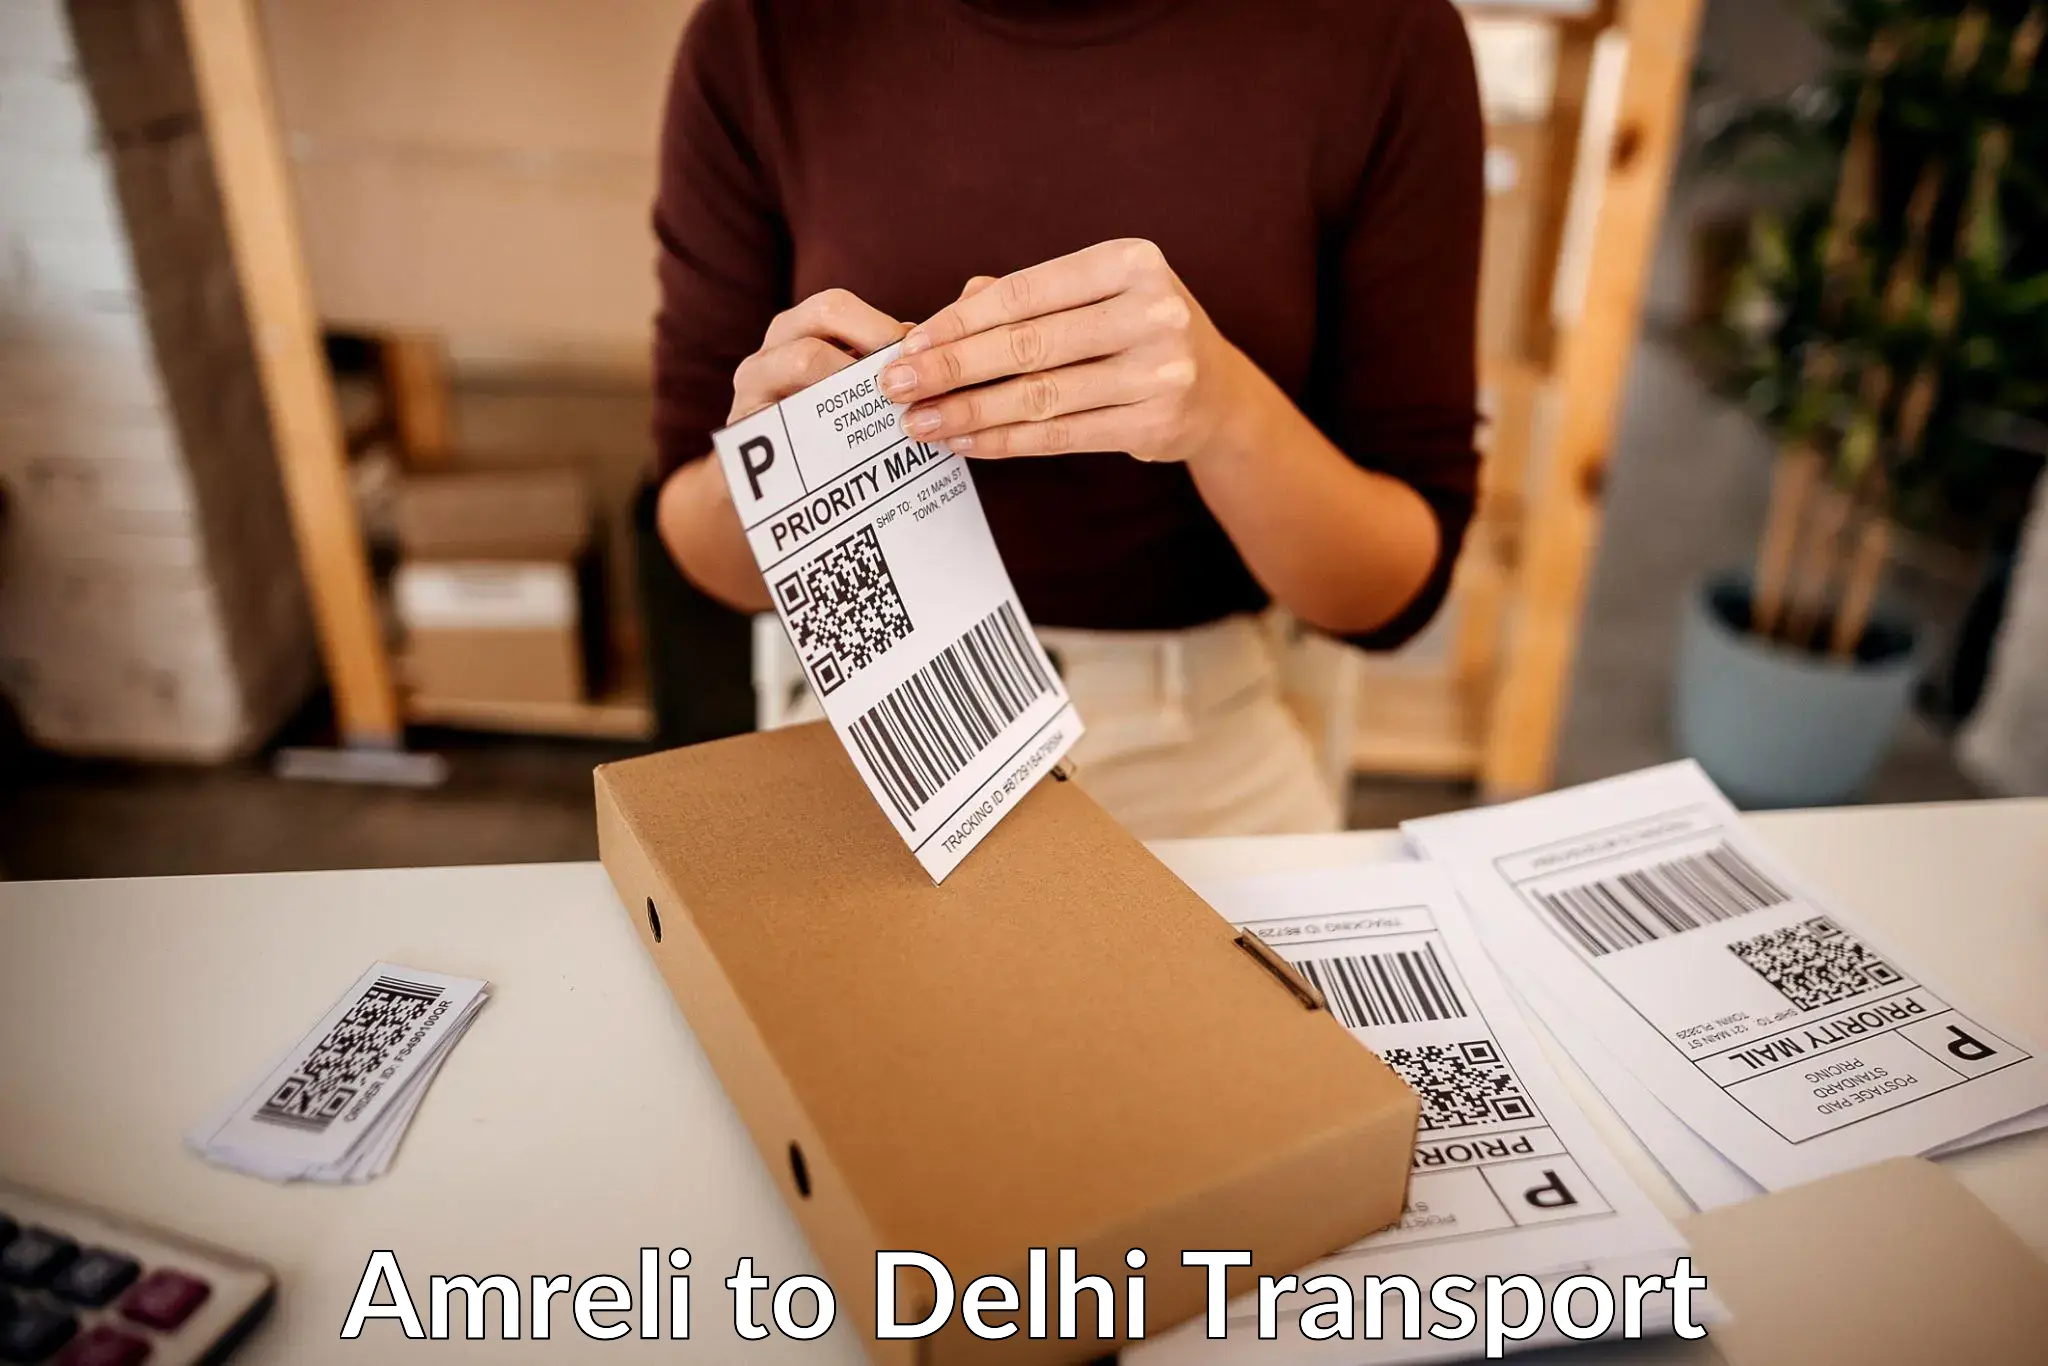 Cycle transportation service Amreli to Delhi